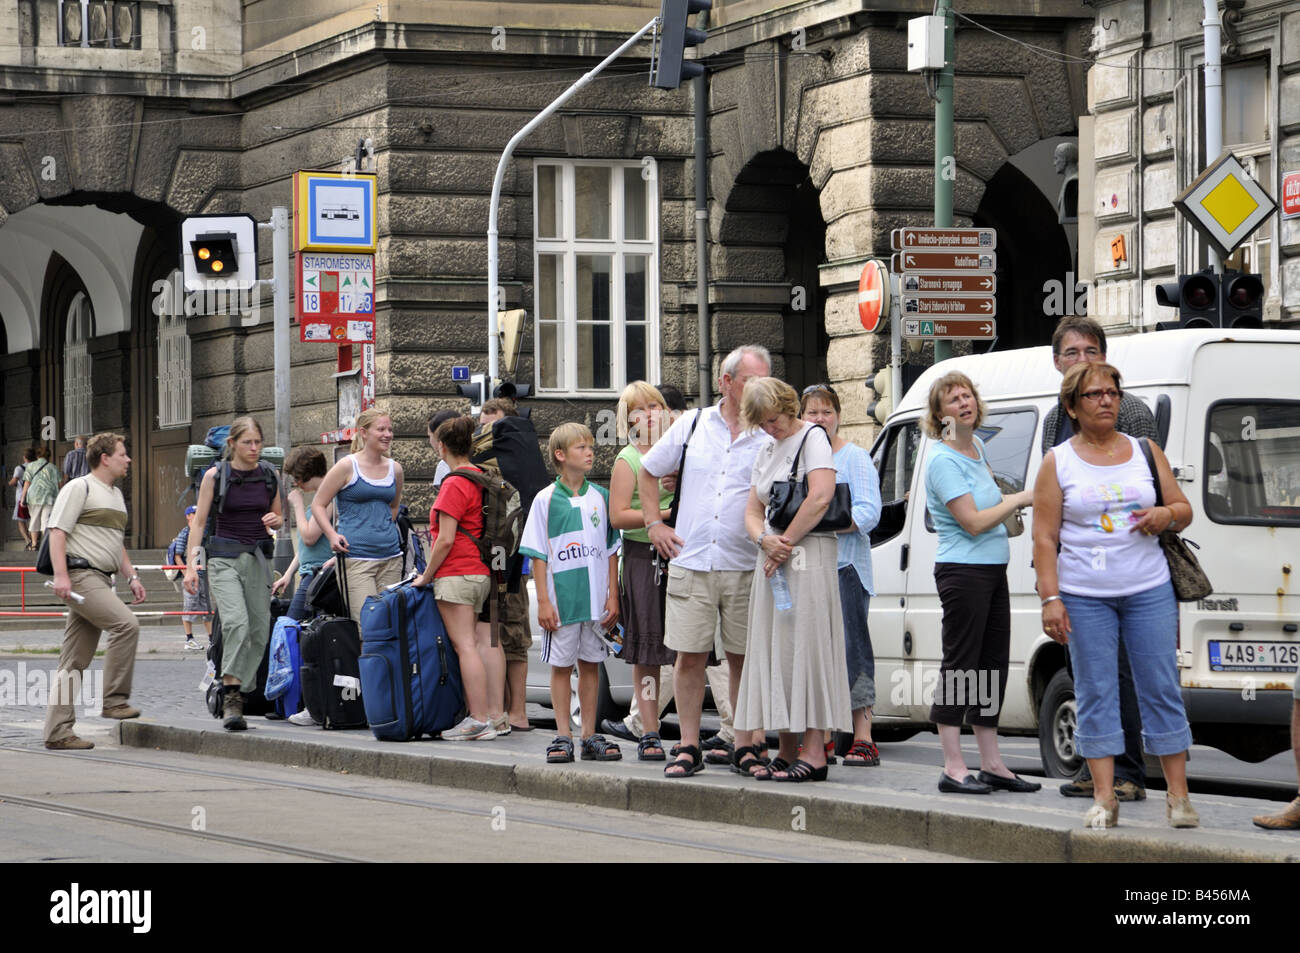 Queue of people waiting at the Starmestska tram stop Prague, Czech Republic. Stock Photo